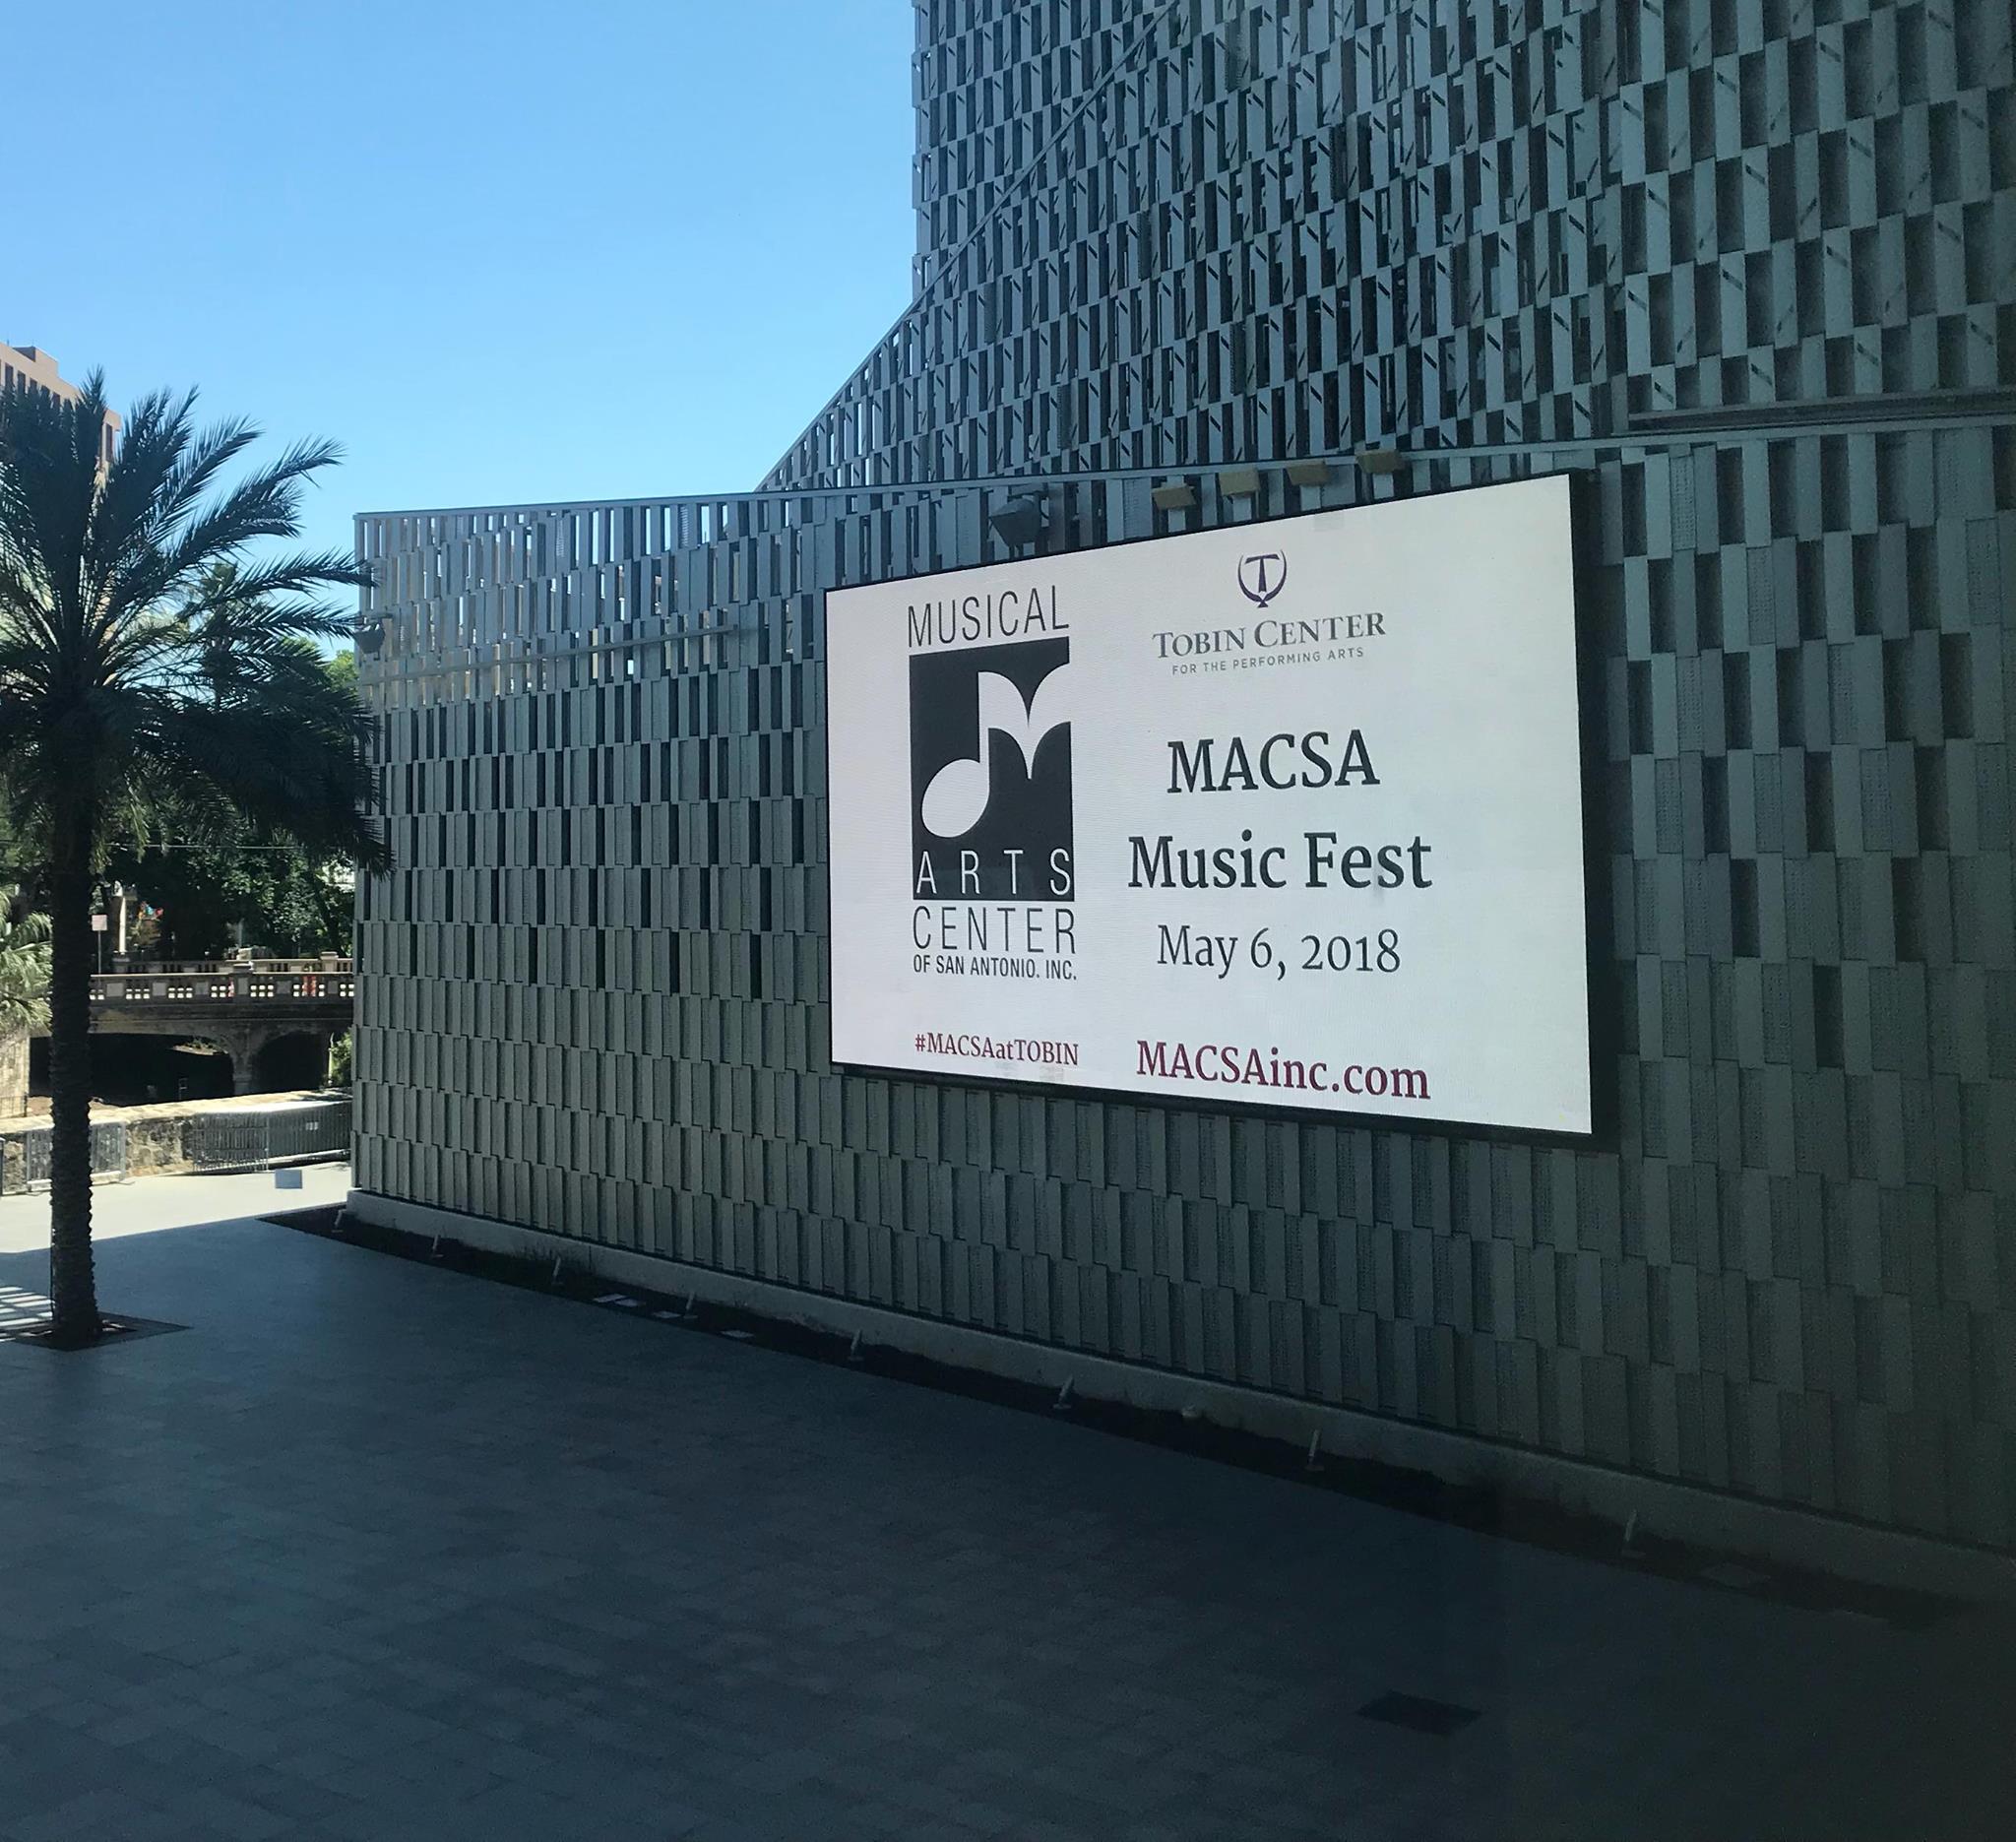 MACSA Music Fest